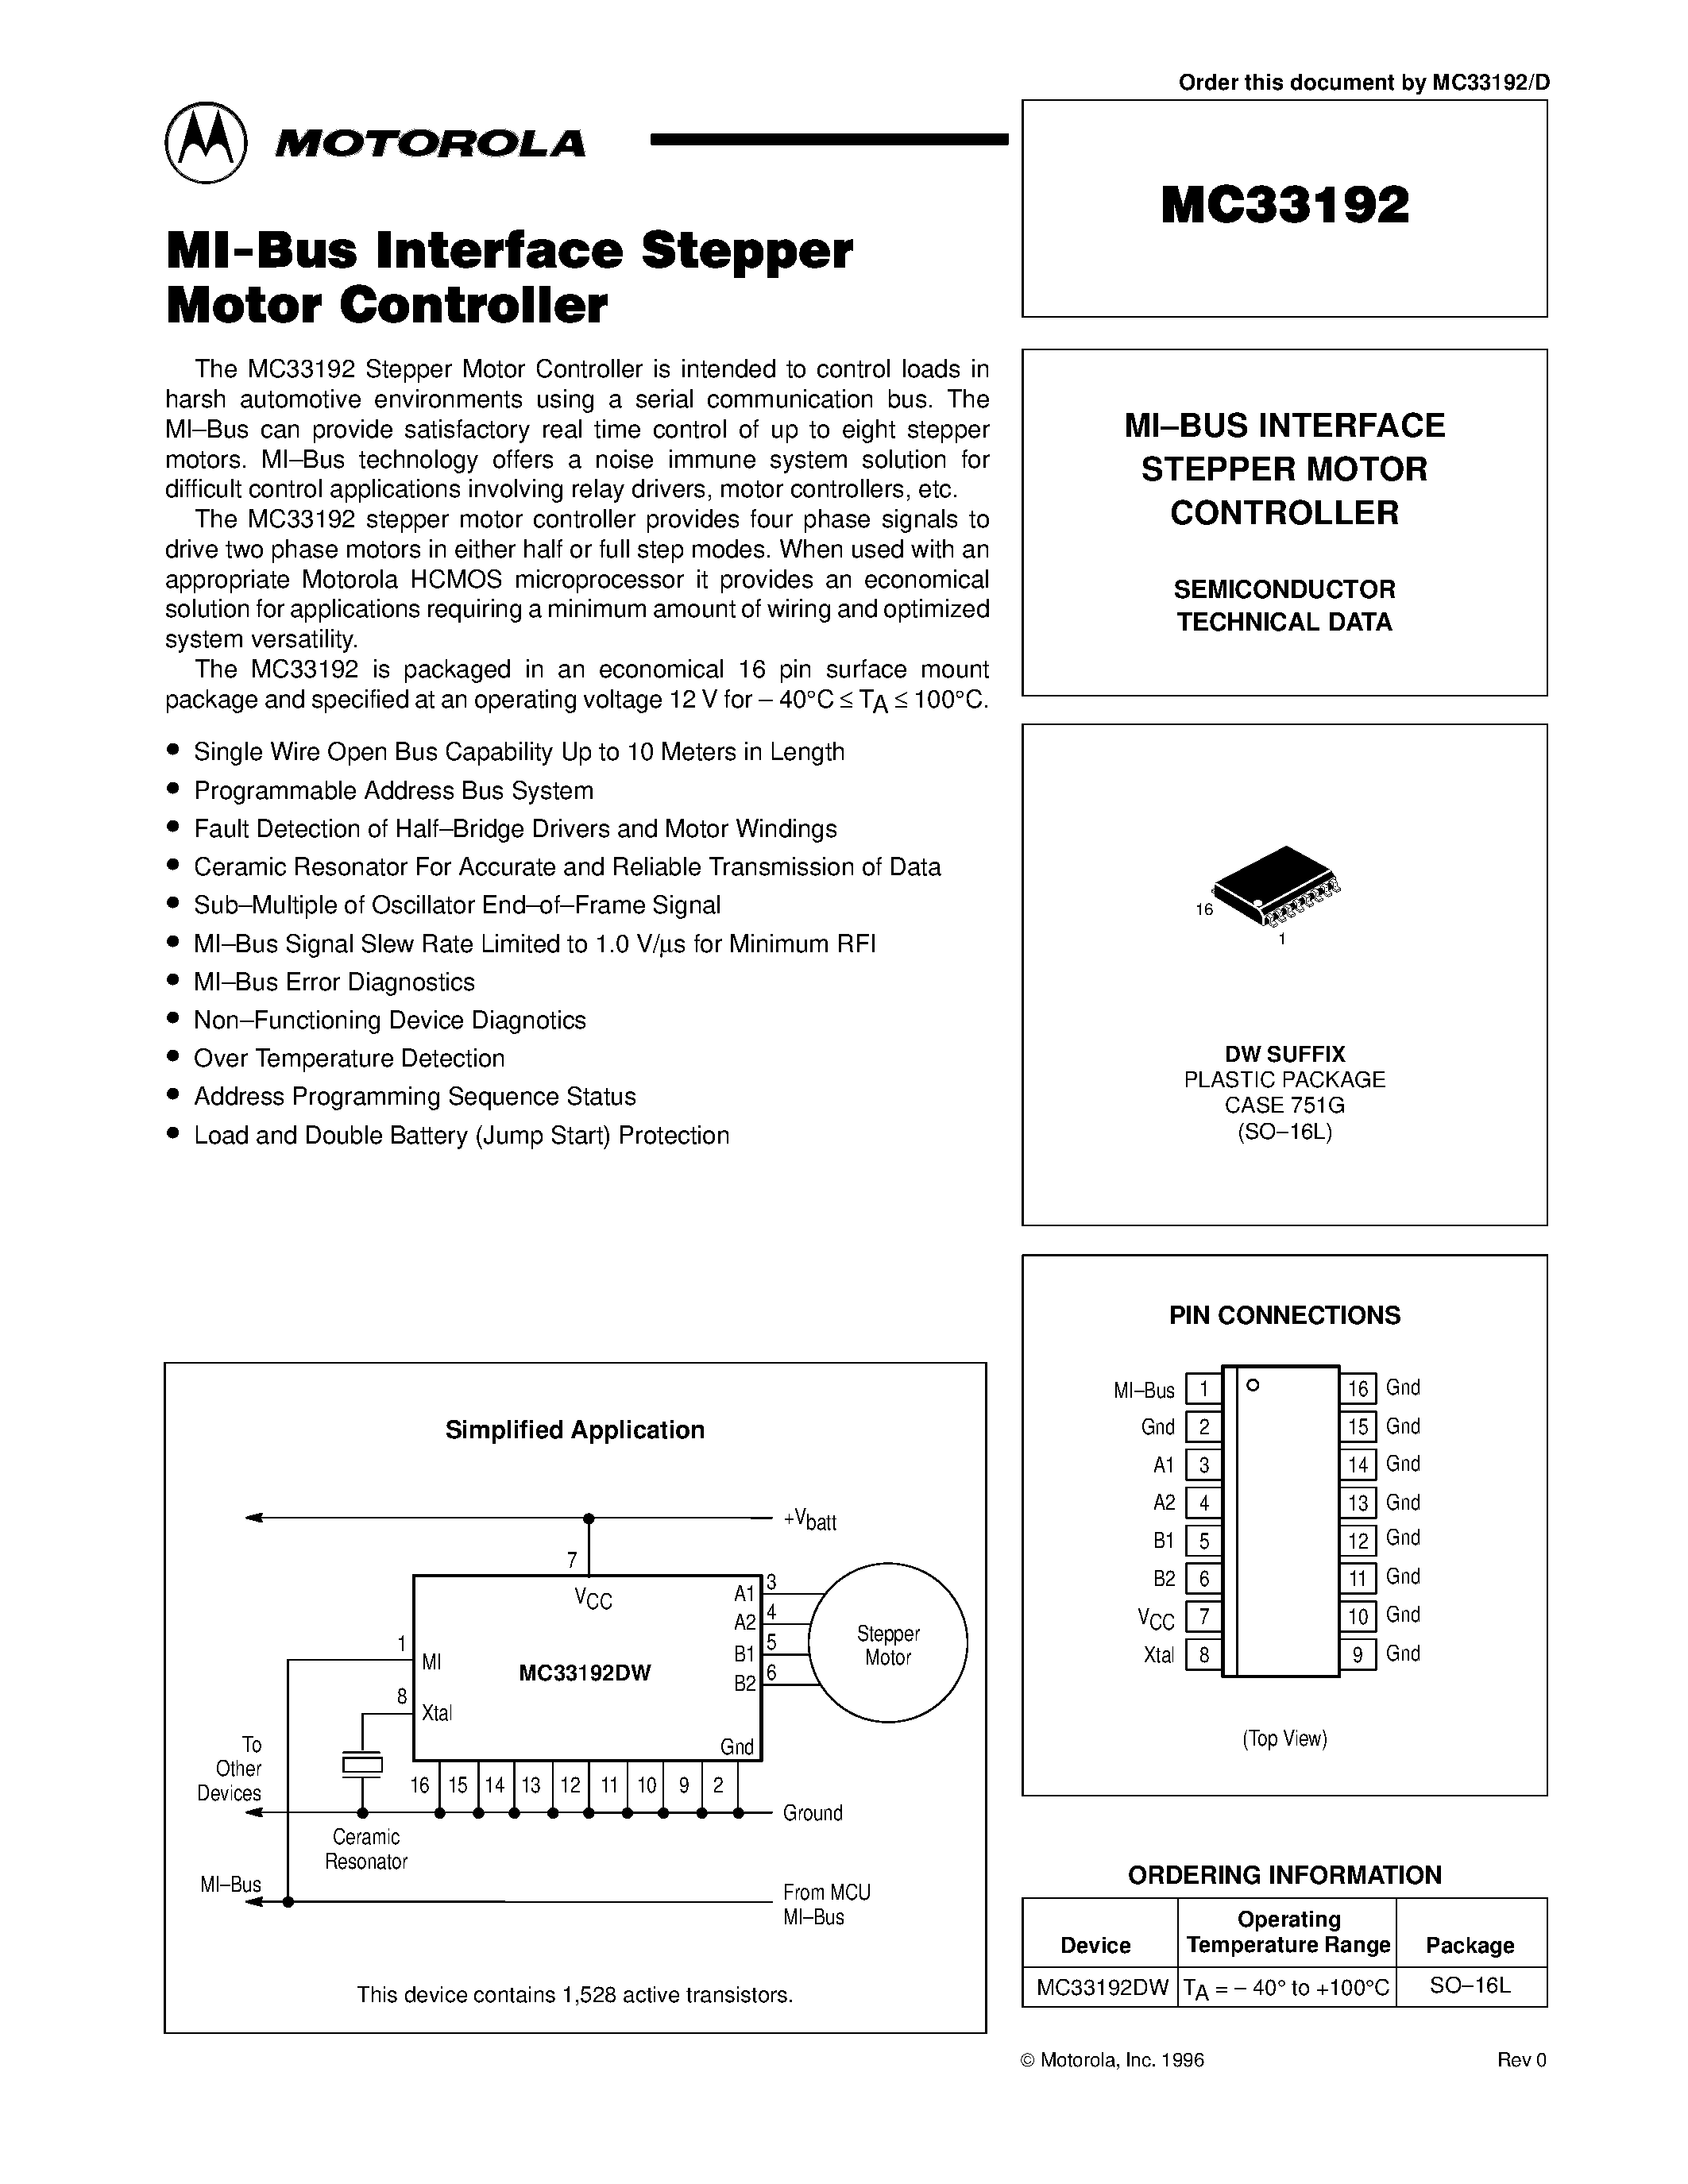 Datasheet MC33192 - MI-BUS INTERFACE STEPPER MOTOR CONTROLLER page 1